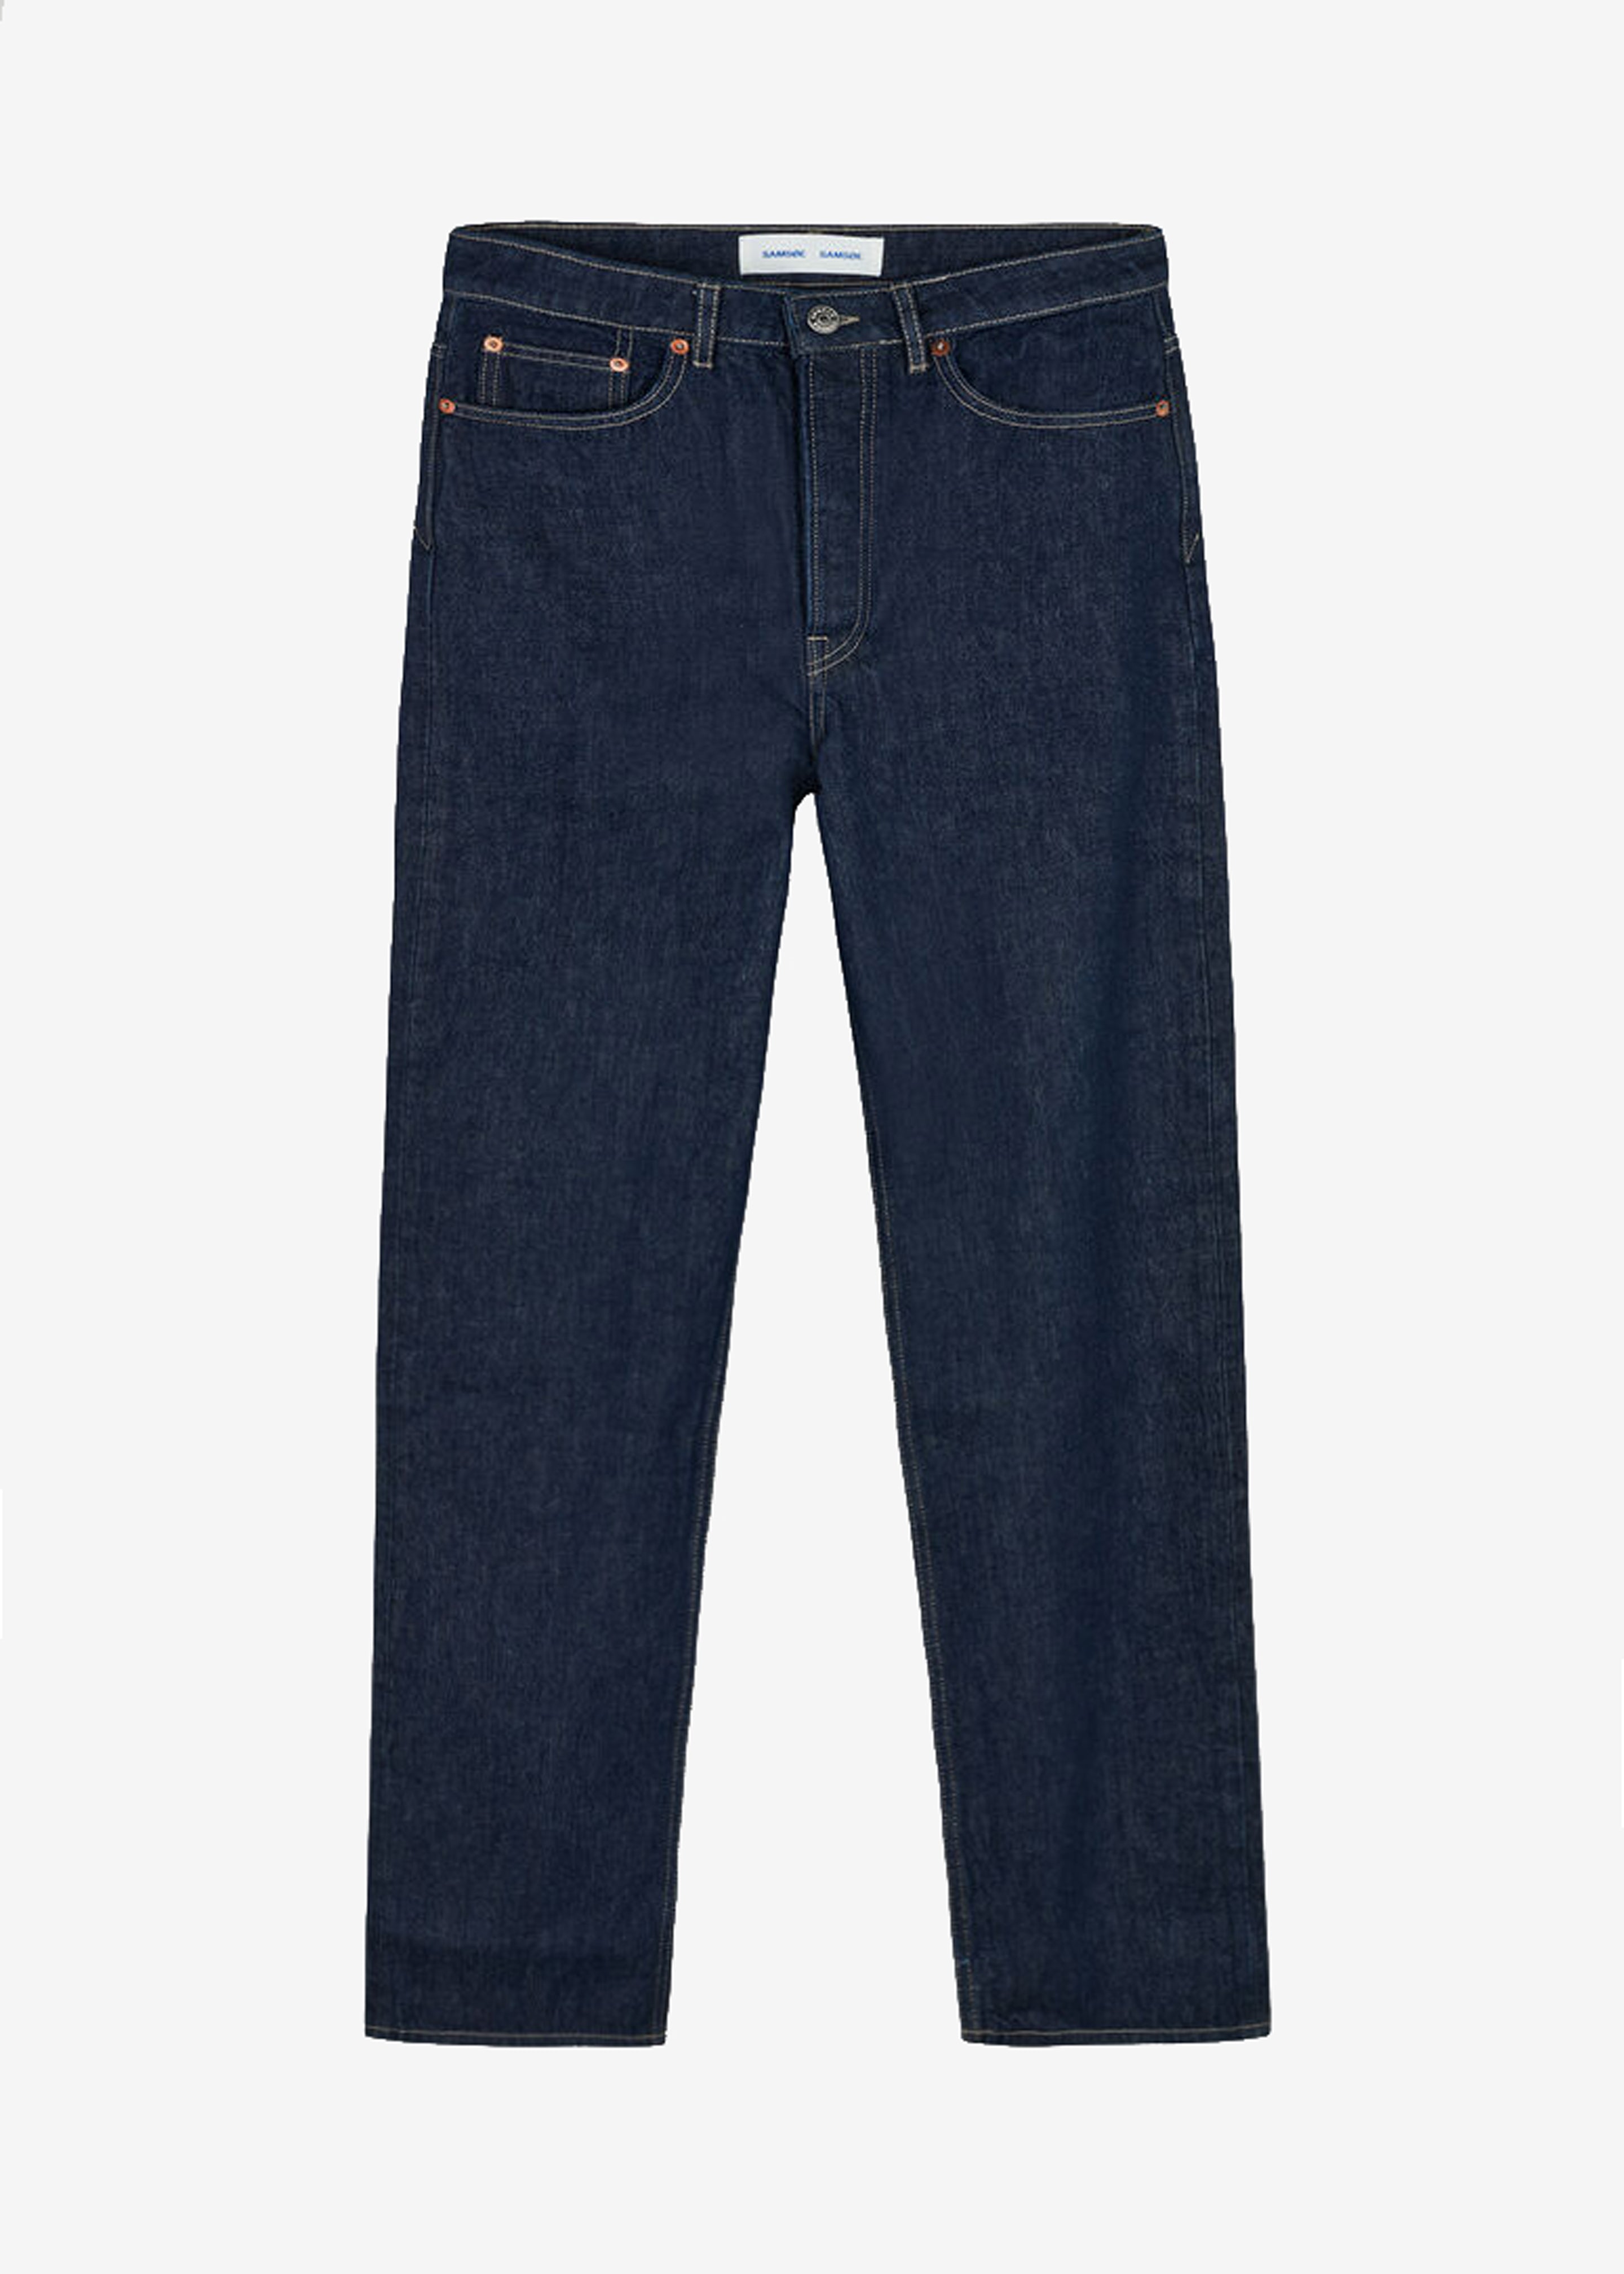 Buy GINI & JONY Washed Denim Reguler Fit Boys Jeans | Shoppers Stop